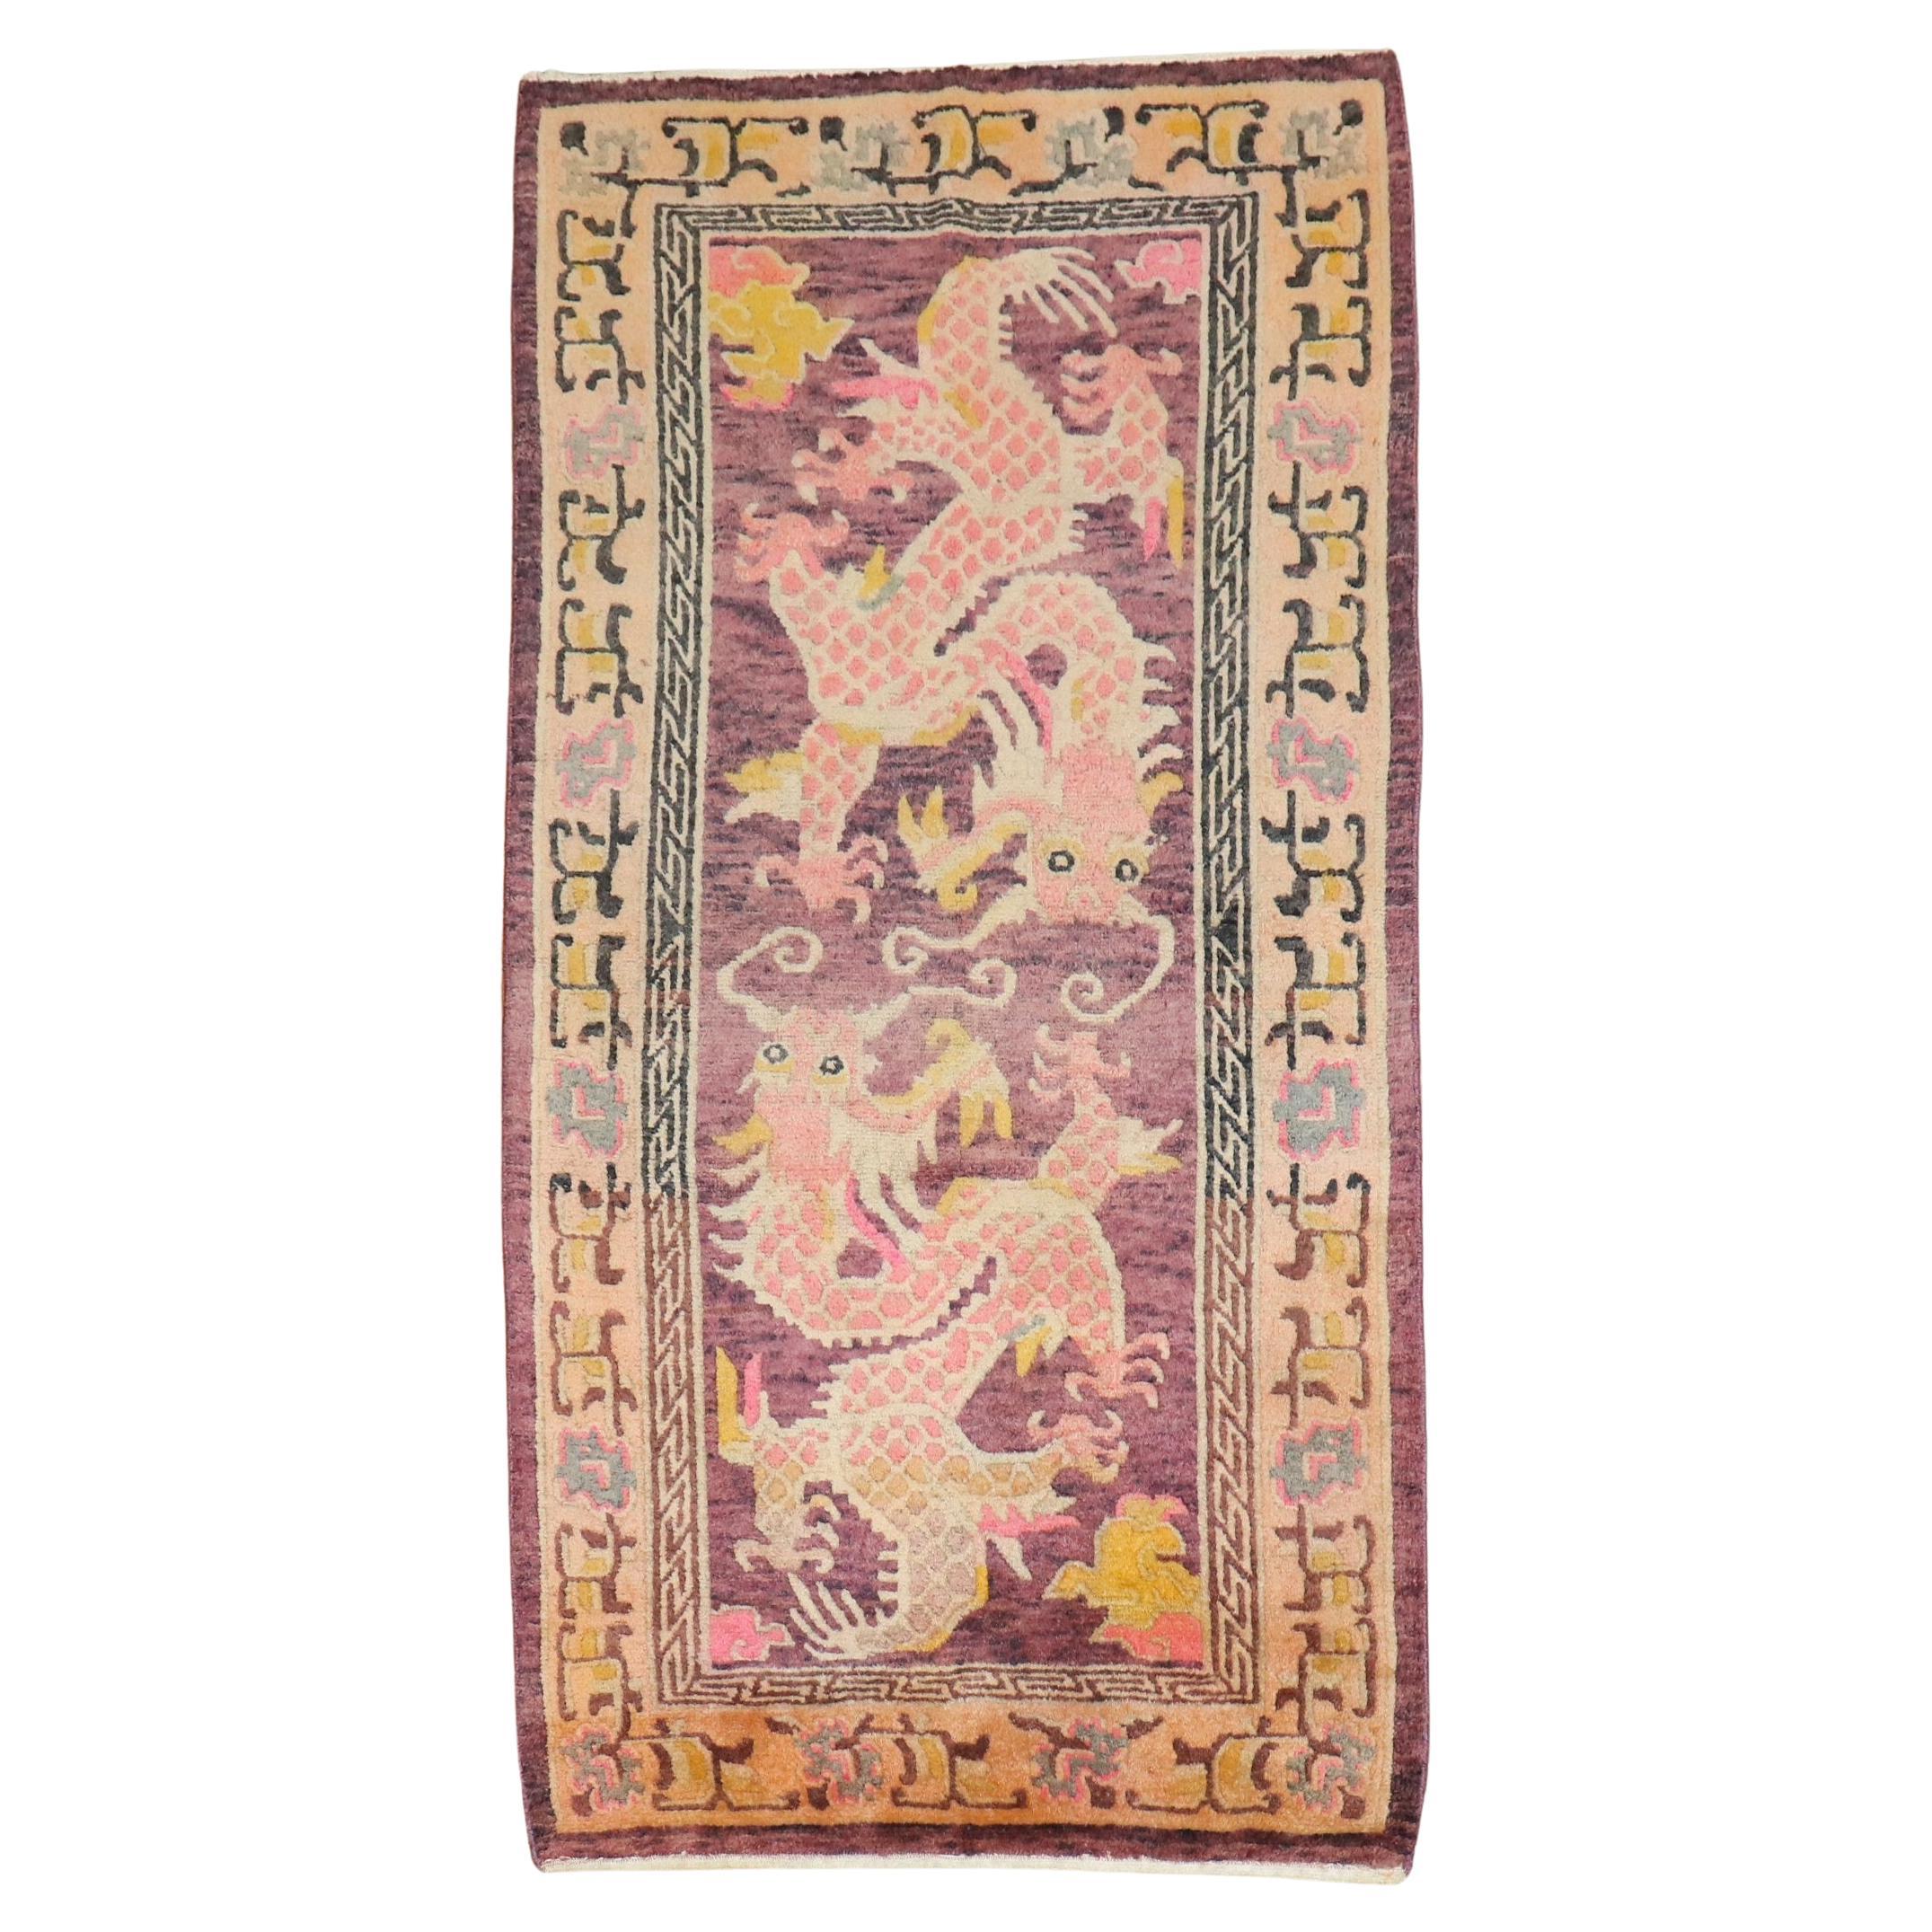 Zabihi Collection Lavender Dragon Vintage Tibetan Rug